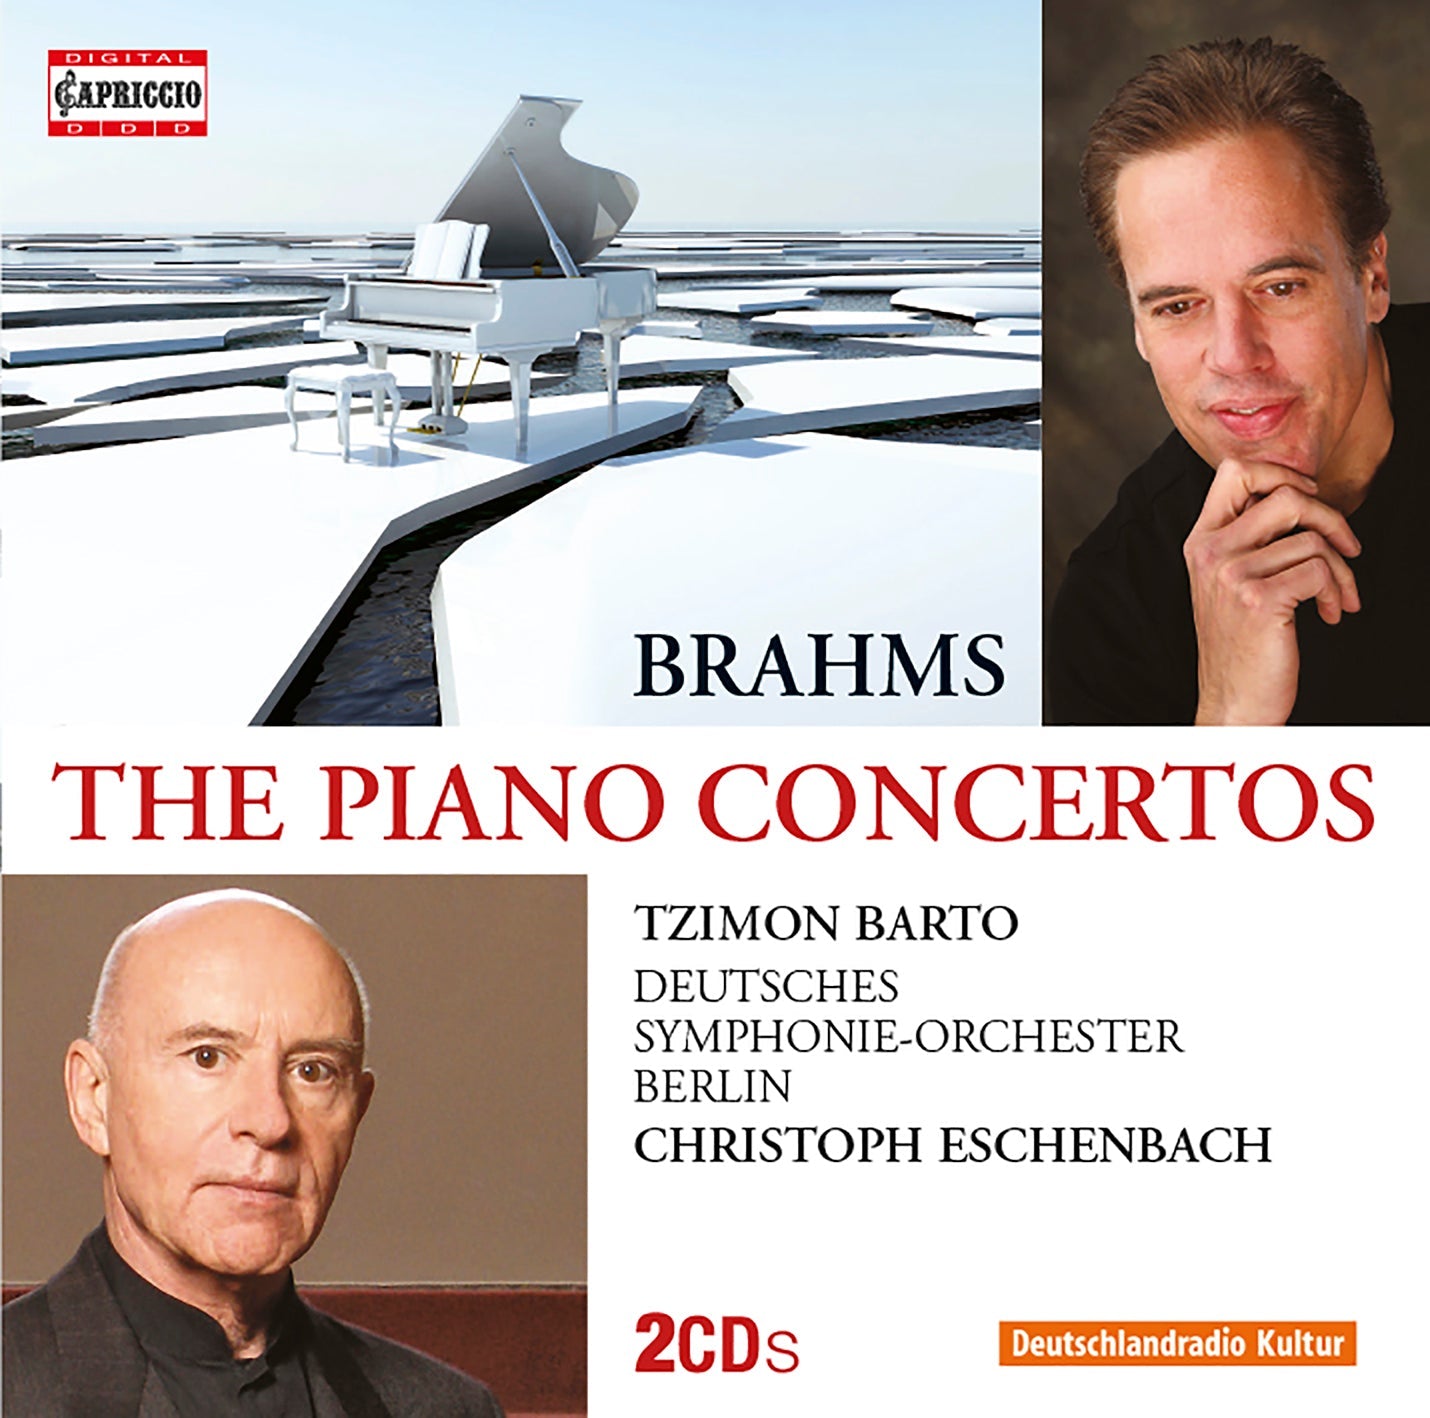 Brahms: The Piano Concertos / Barto, Eschenbach, Deutsches Symphony Orchestra Berlin